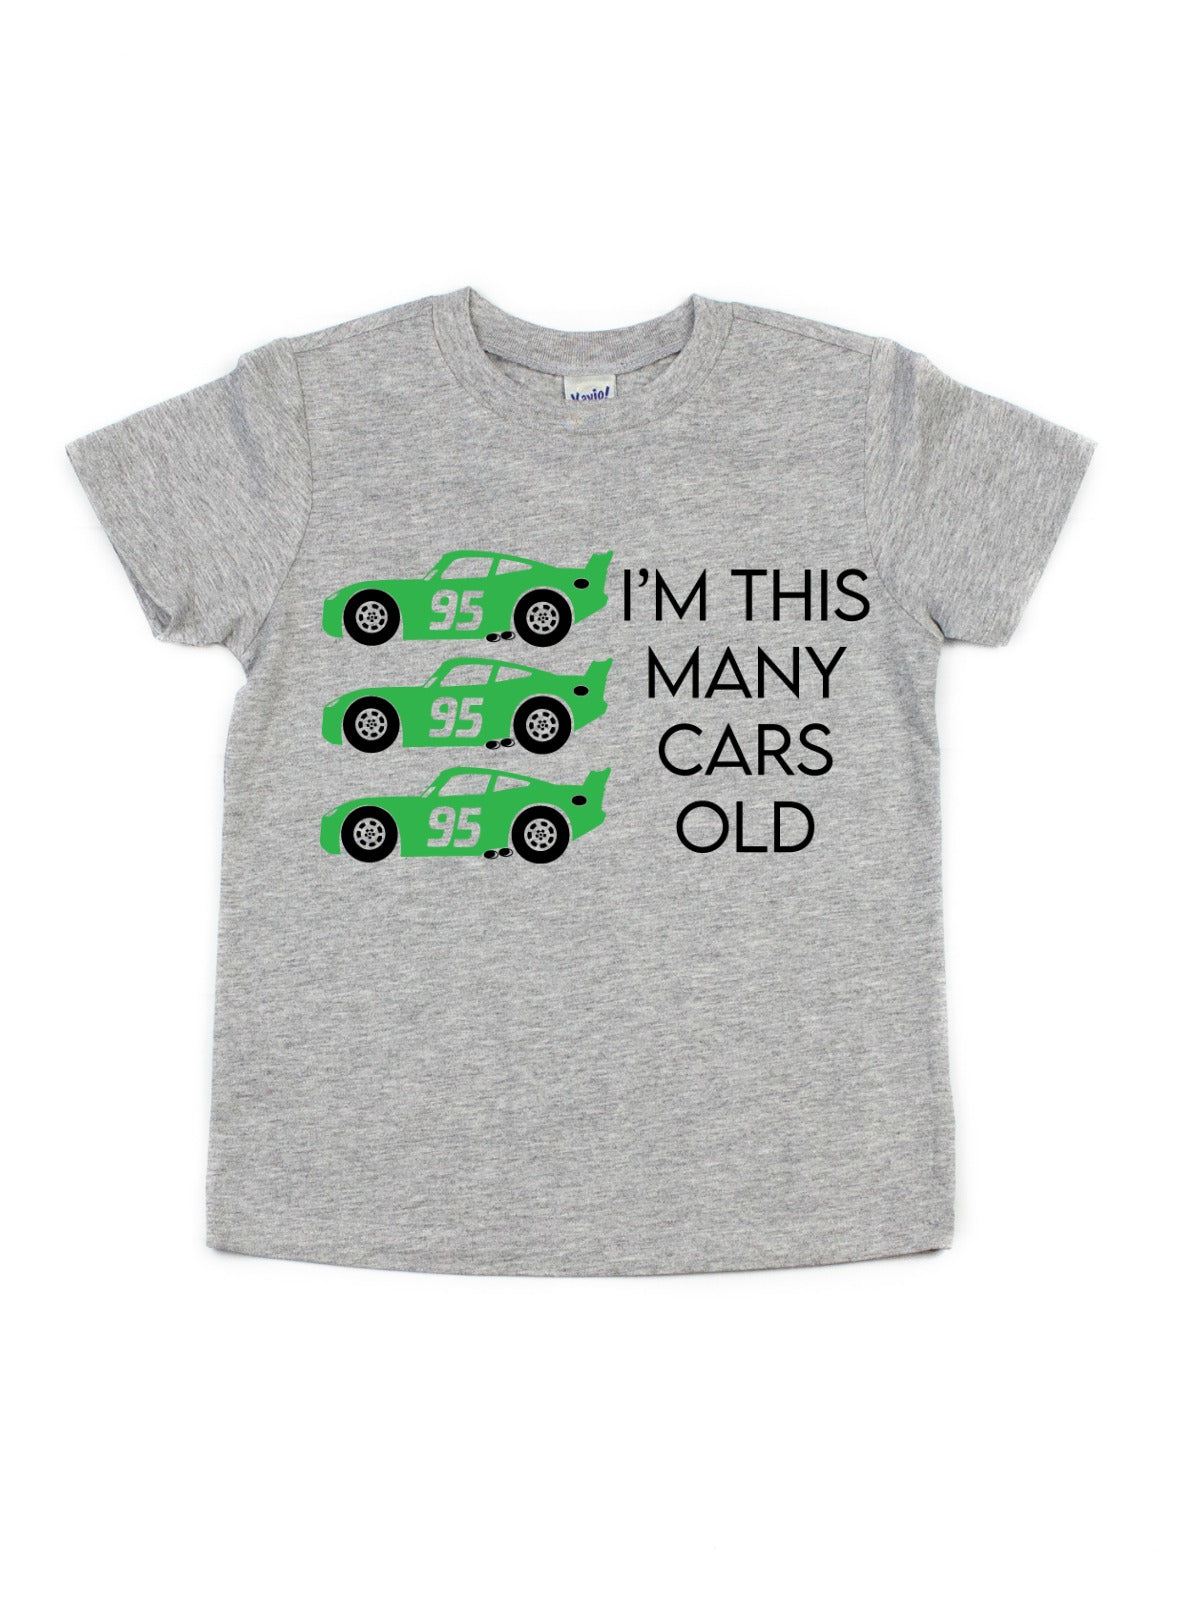 I'm this many cars old boys birthday shirt race car